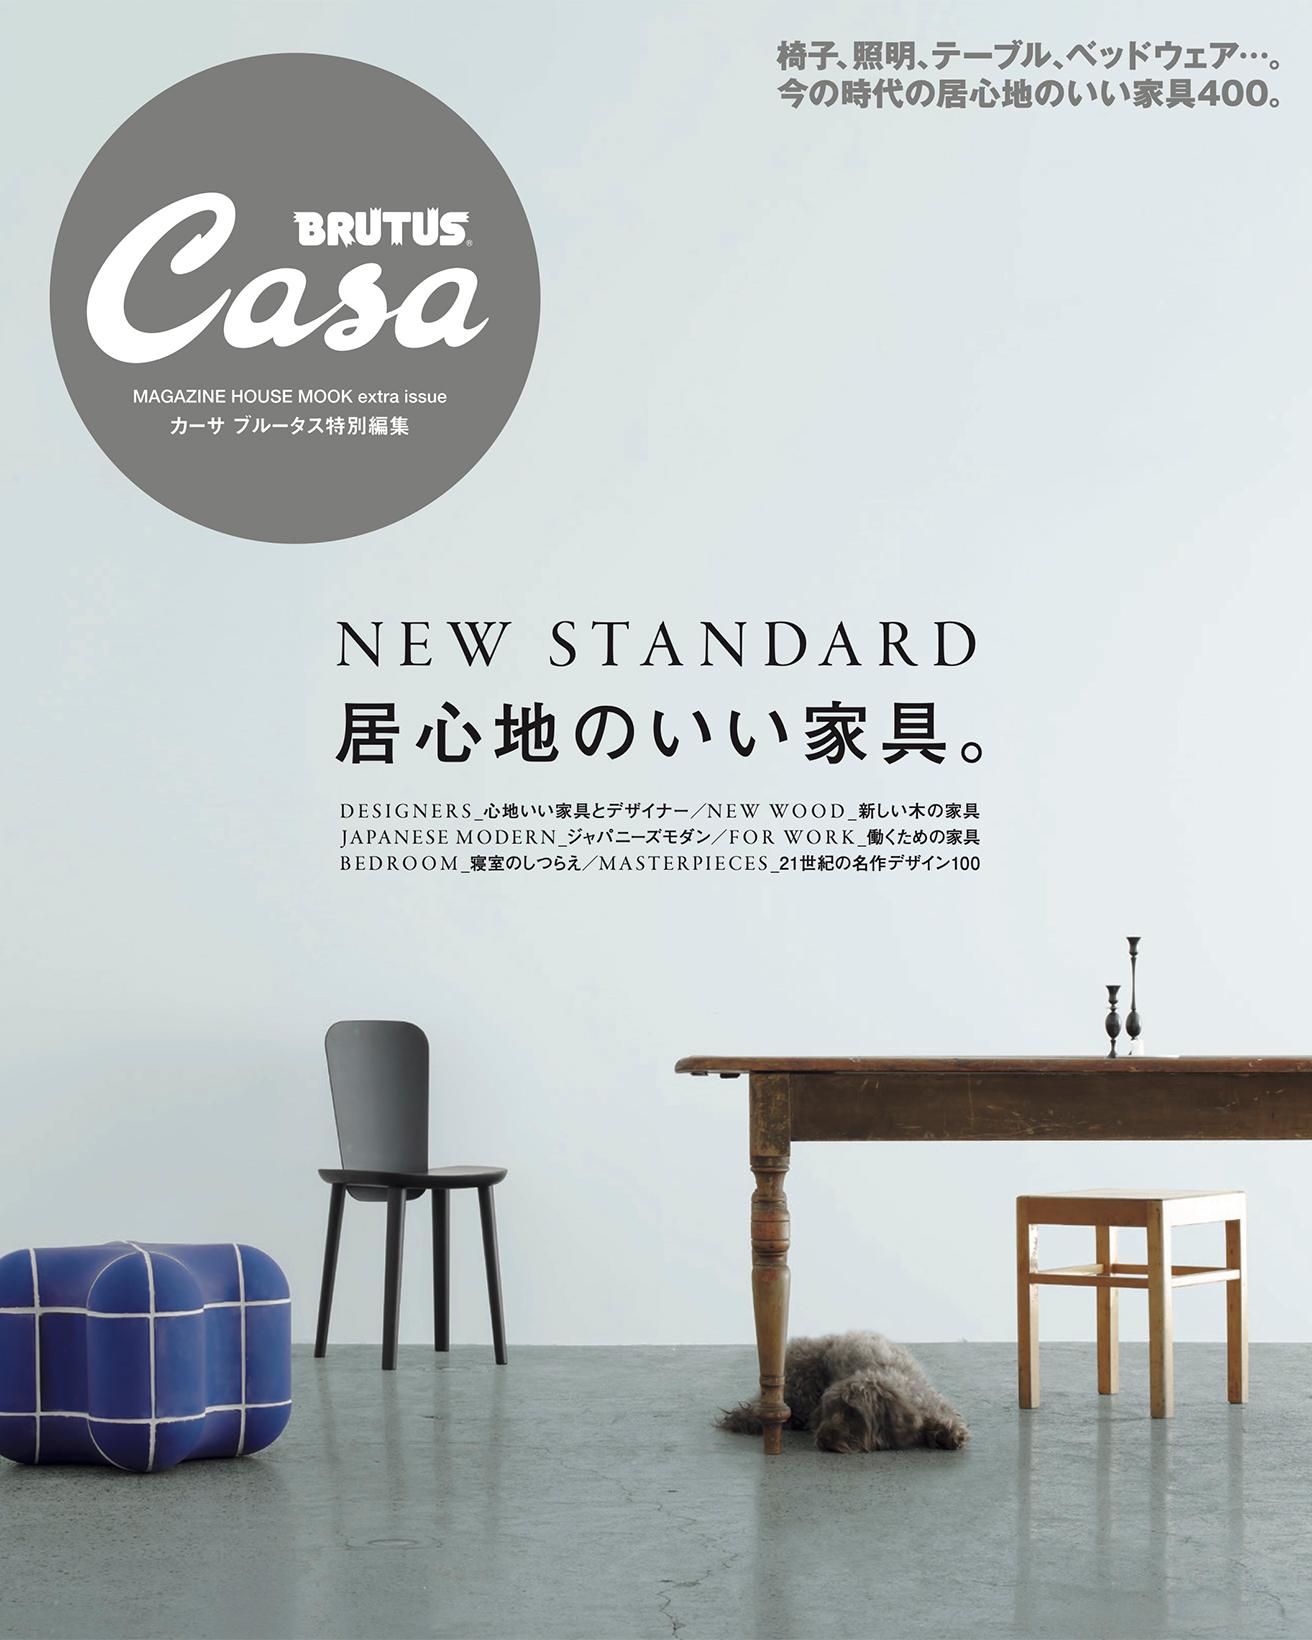 Casa BRUTUS特別編集『居心地のいい家具。』発売中！